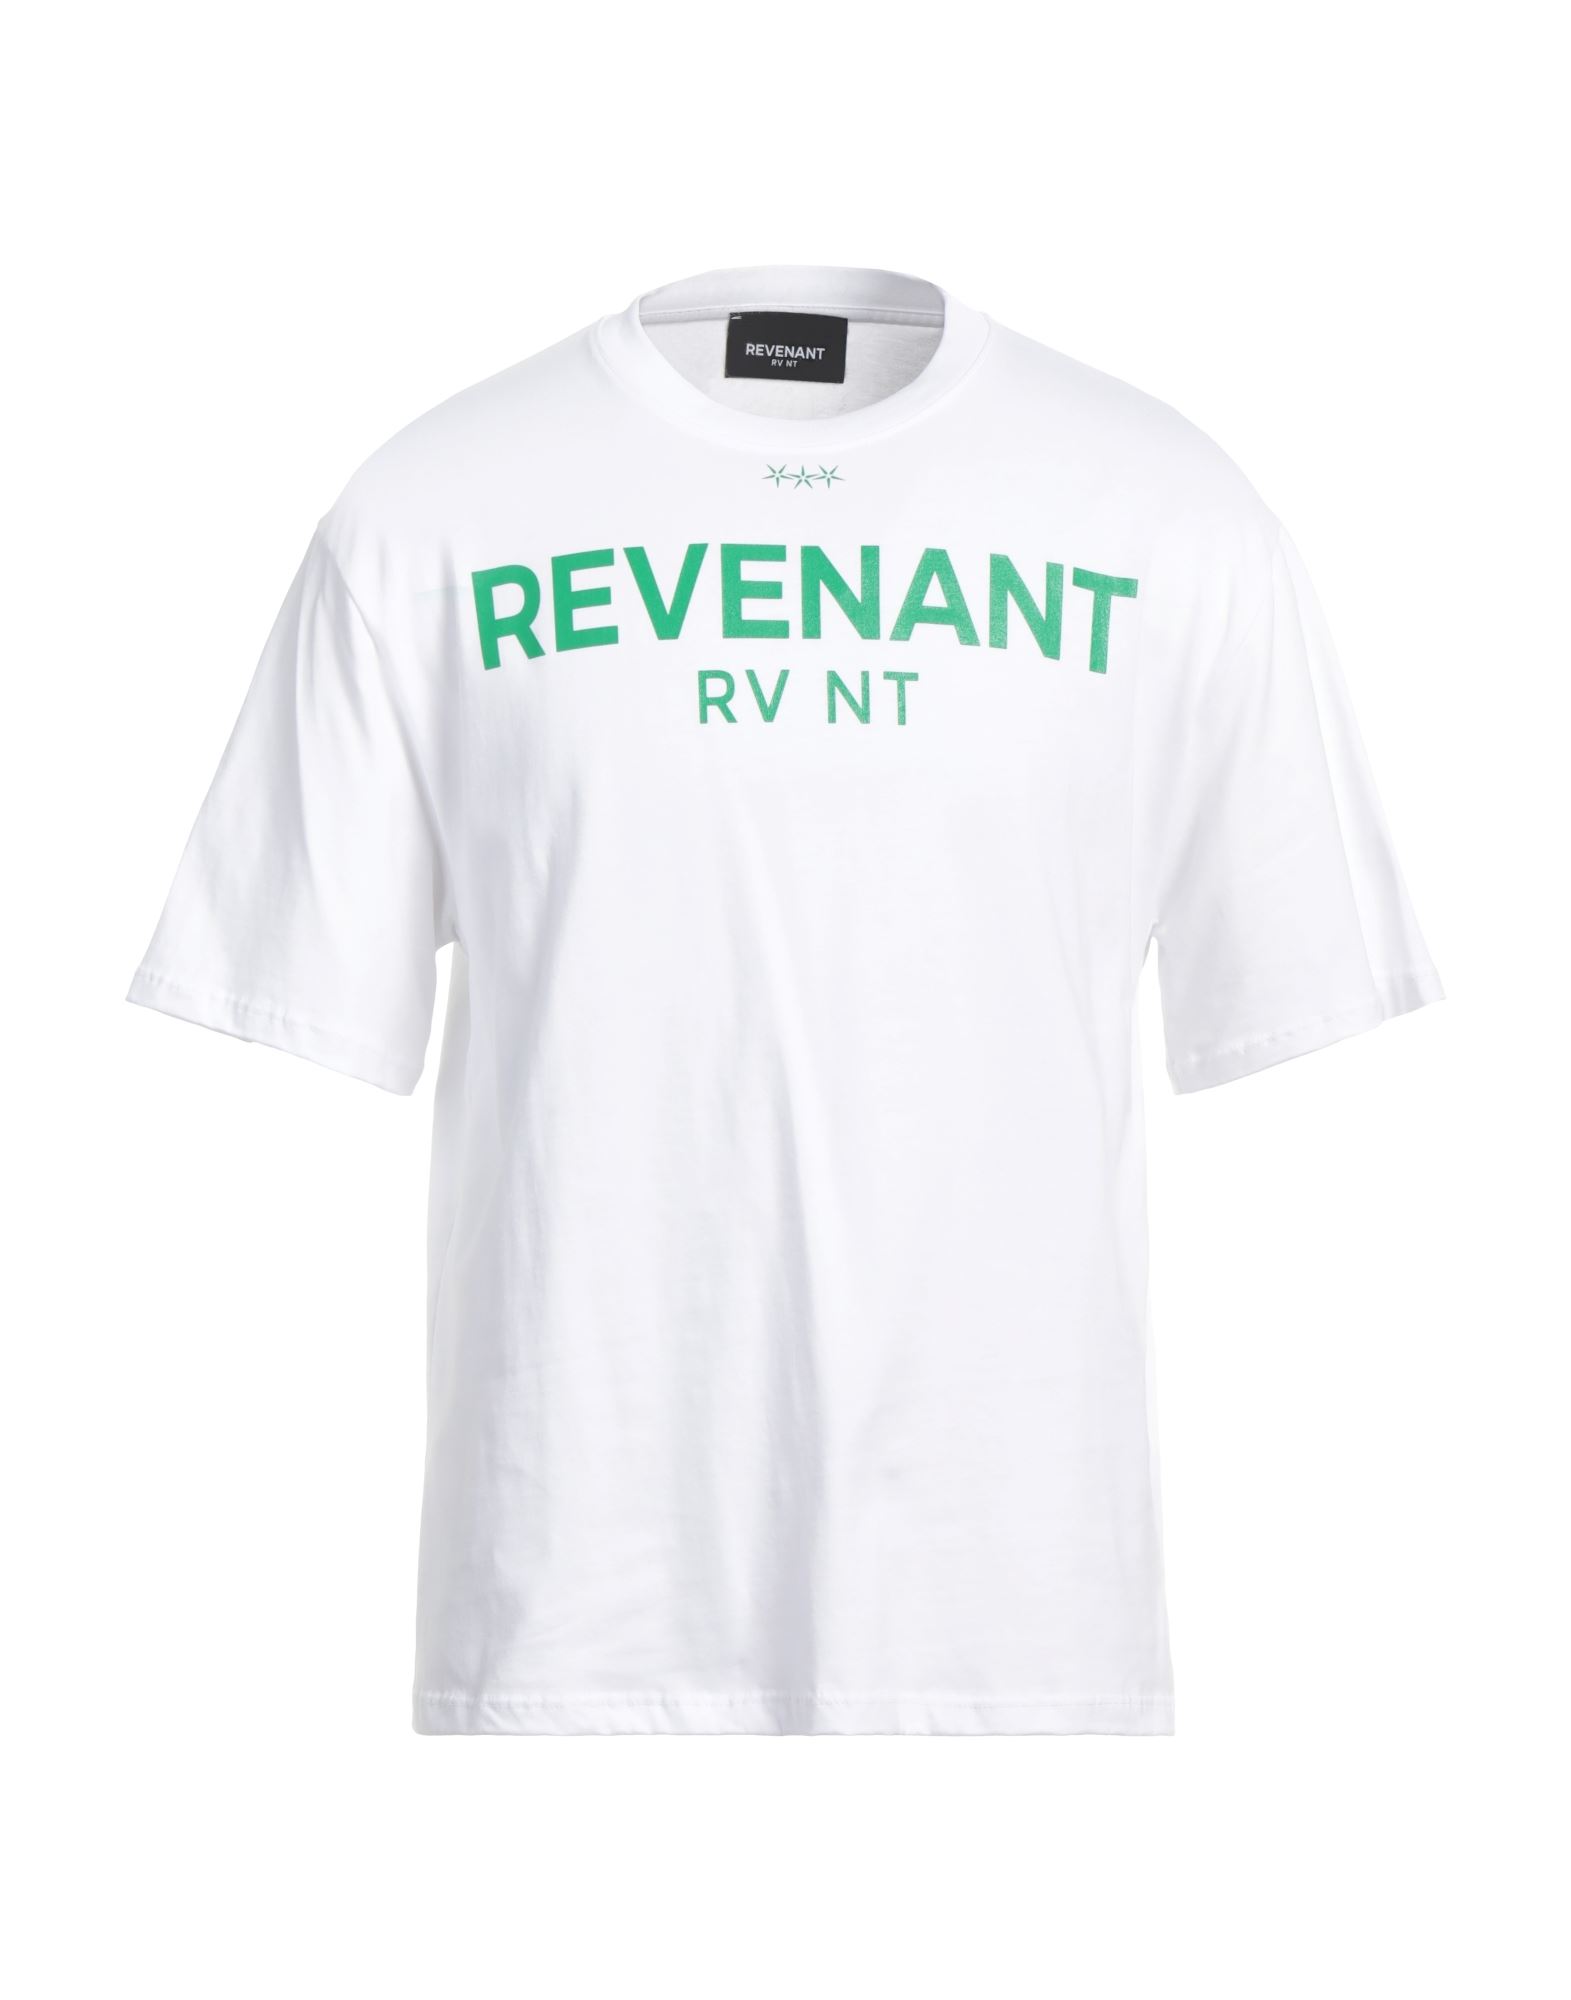 Revenant Rv Nt T-shirts In White